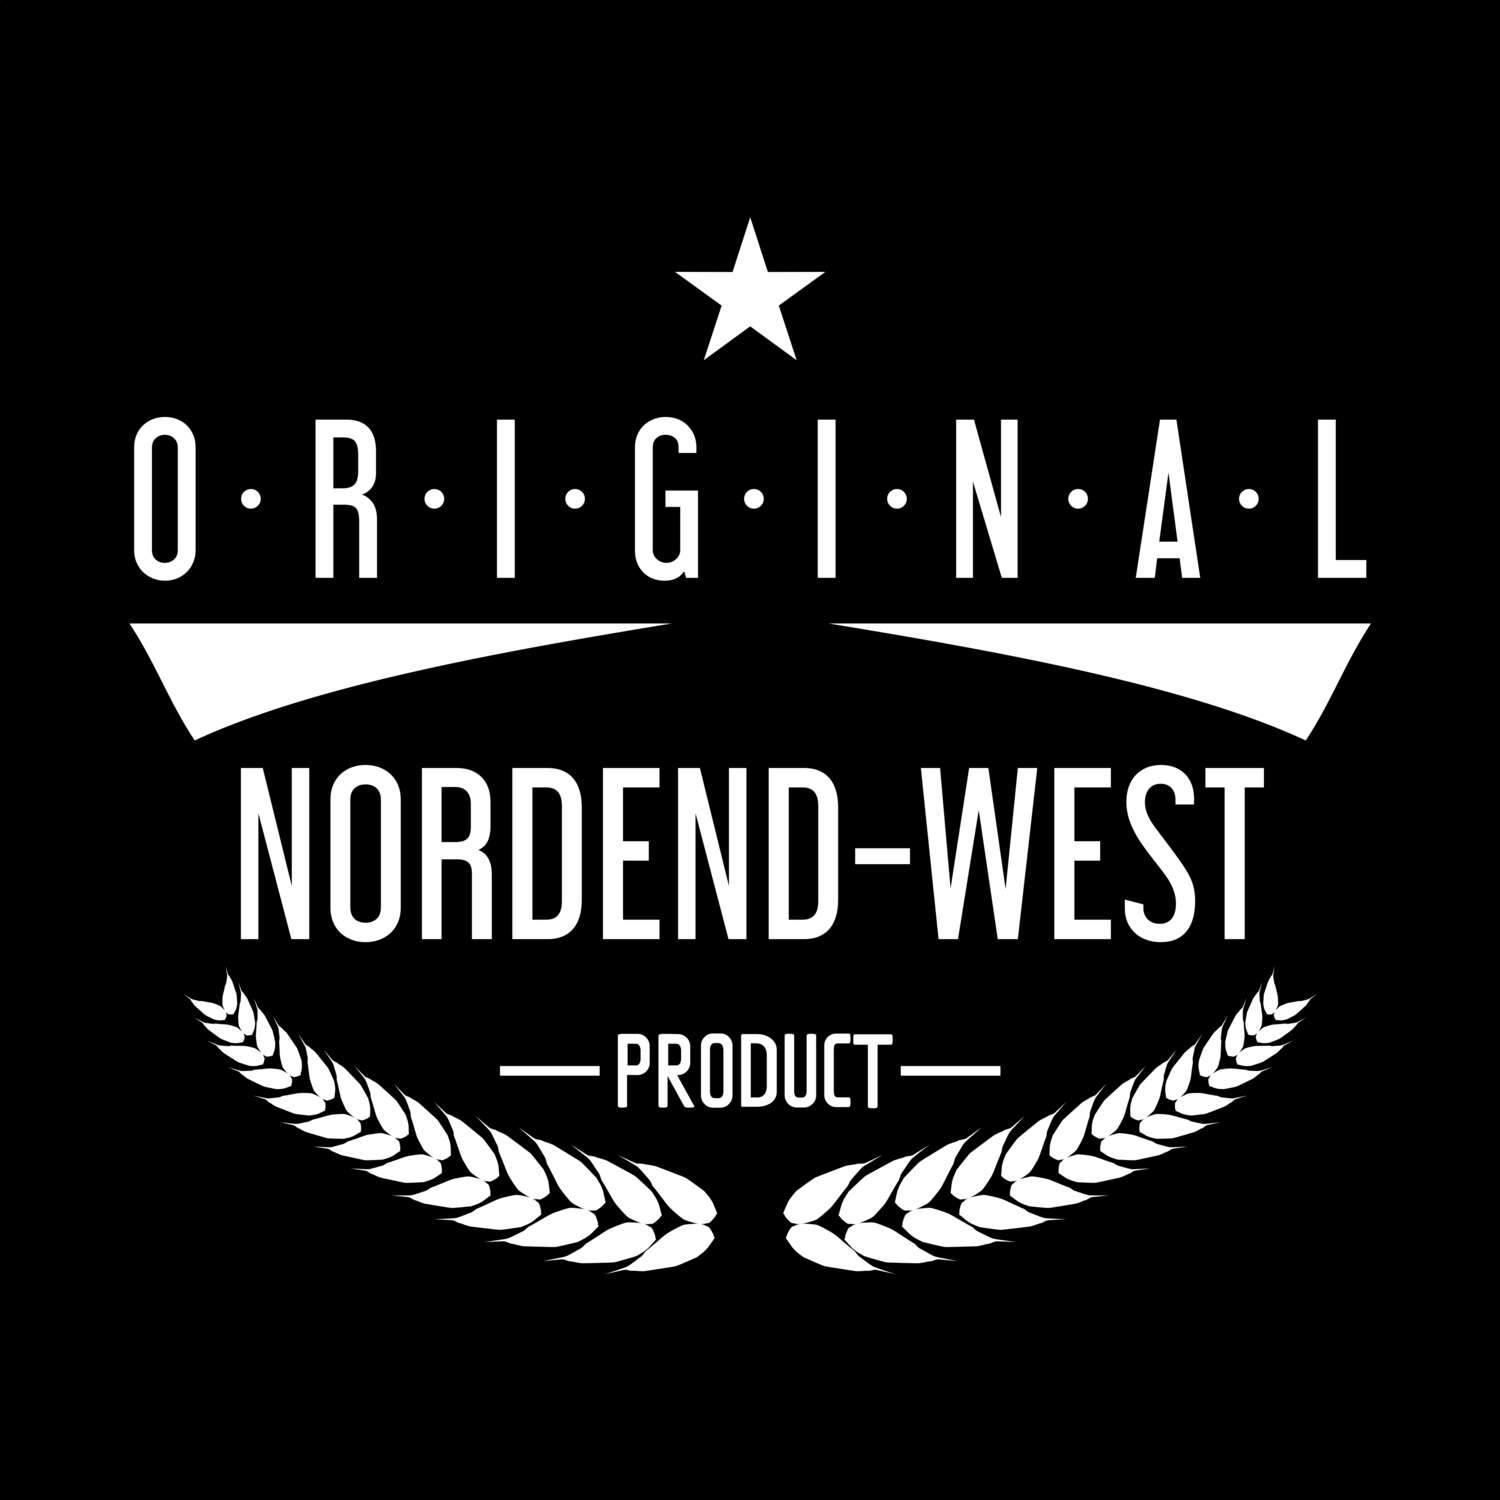 Nordend-West T-Shirt »Original Product«